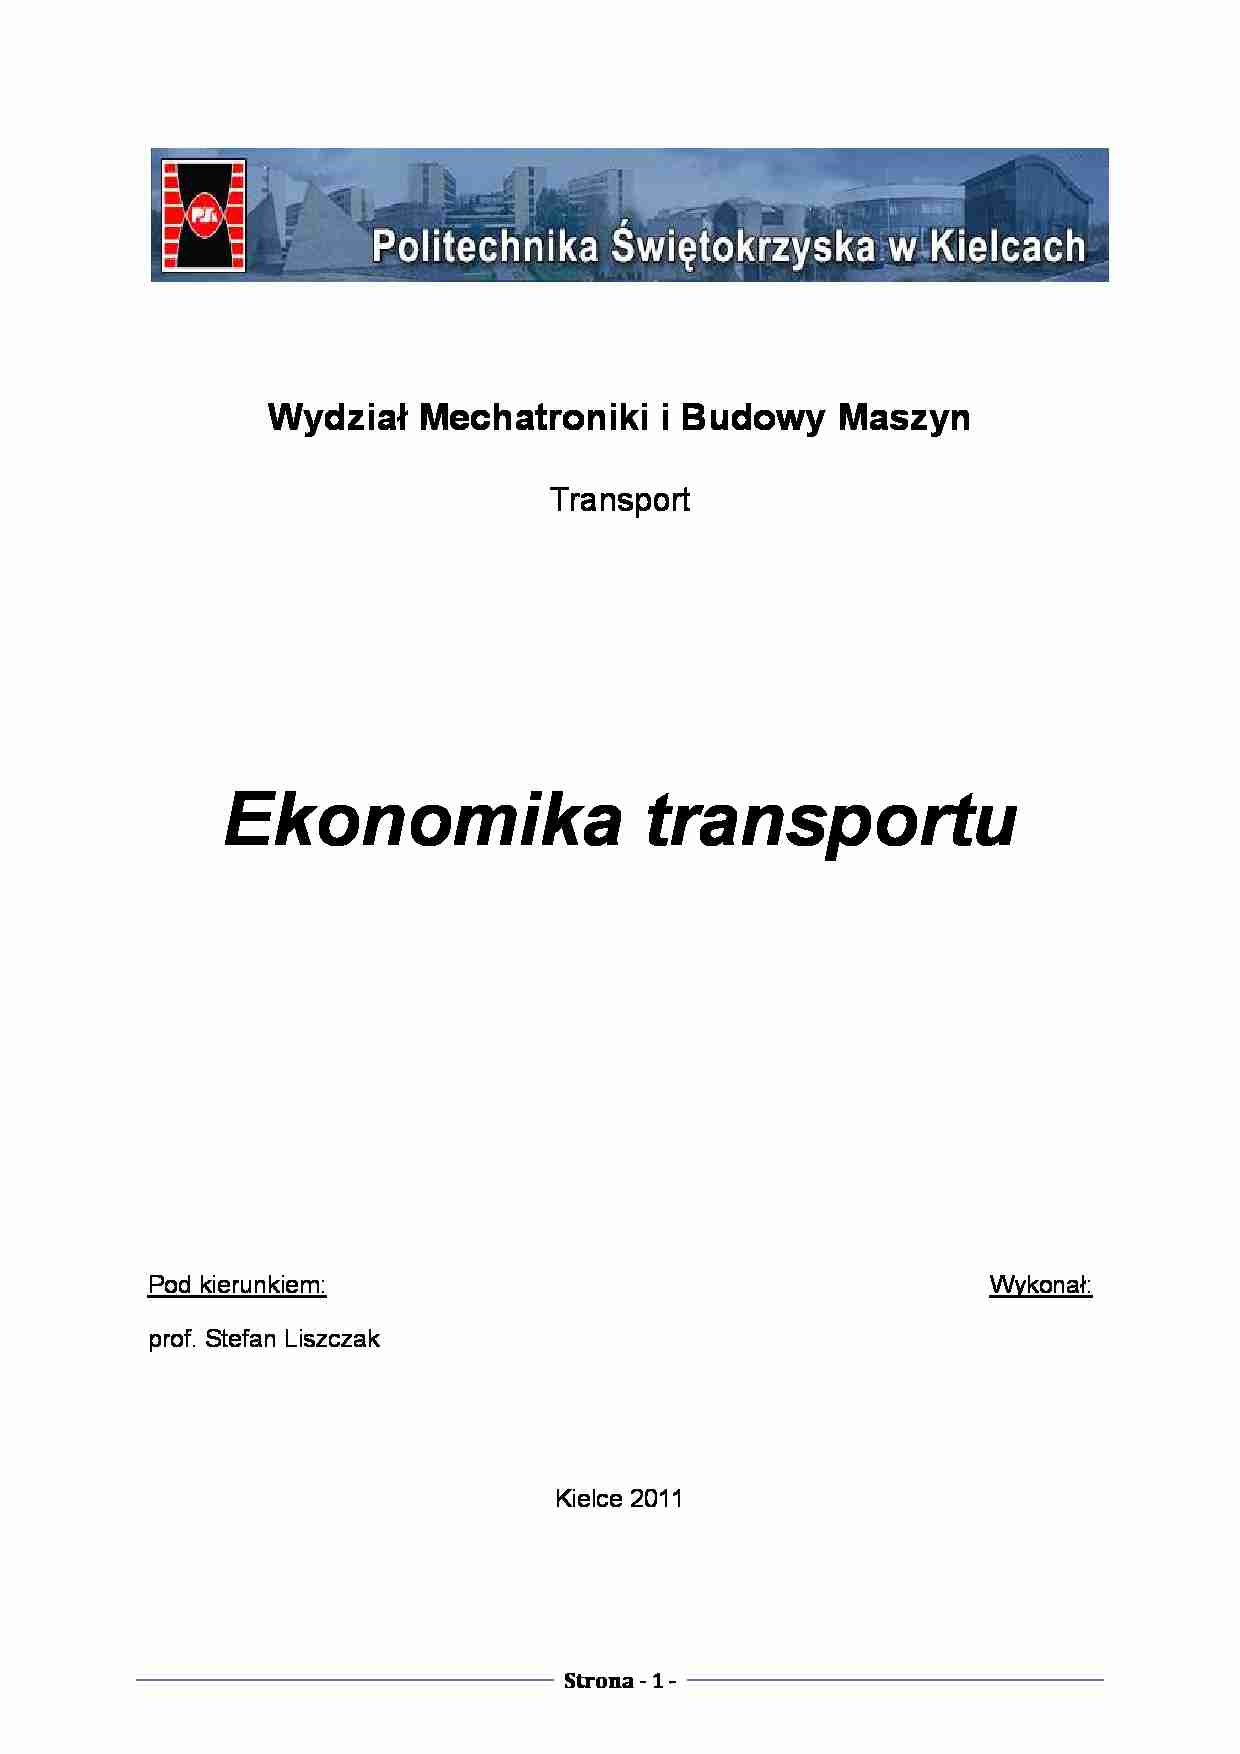 Ekonomika transportu - projekt - strona 1